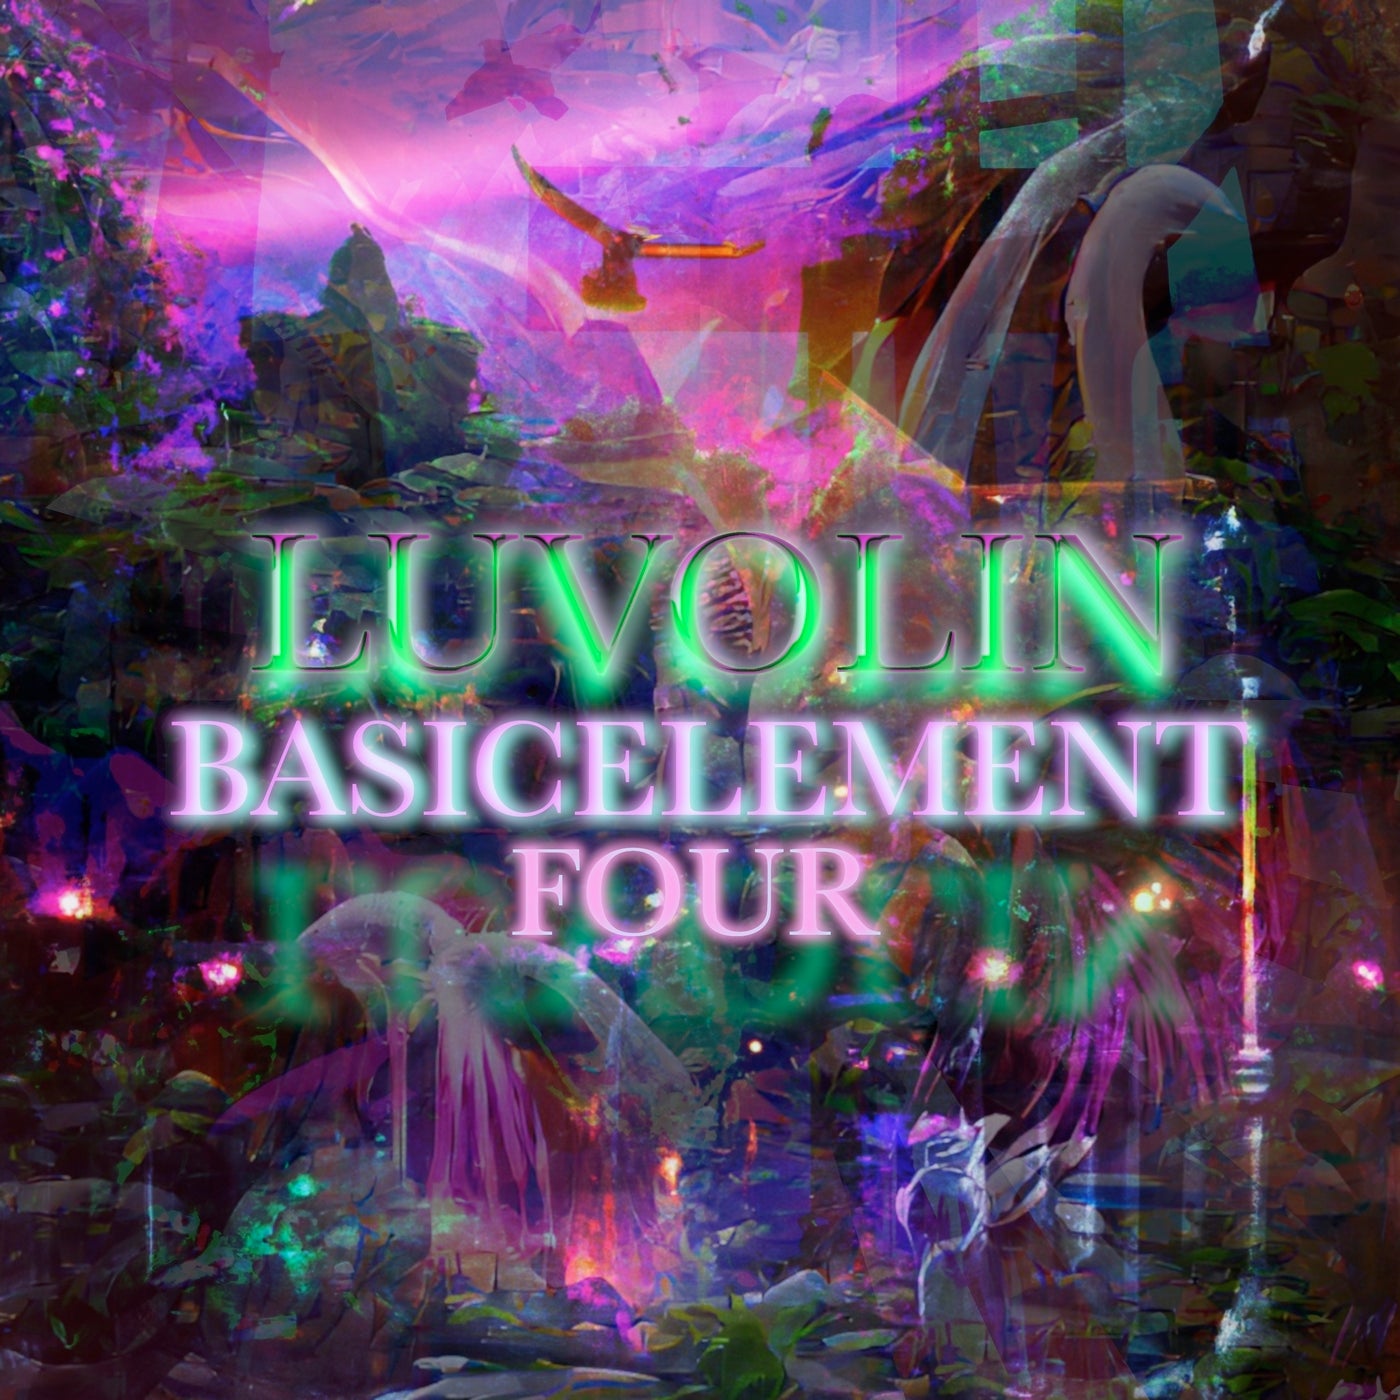 Basicelement Four